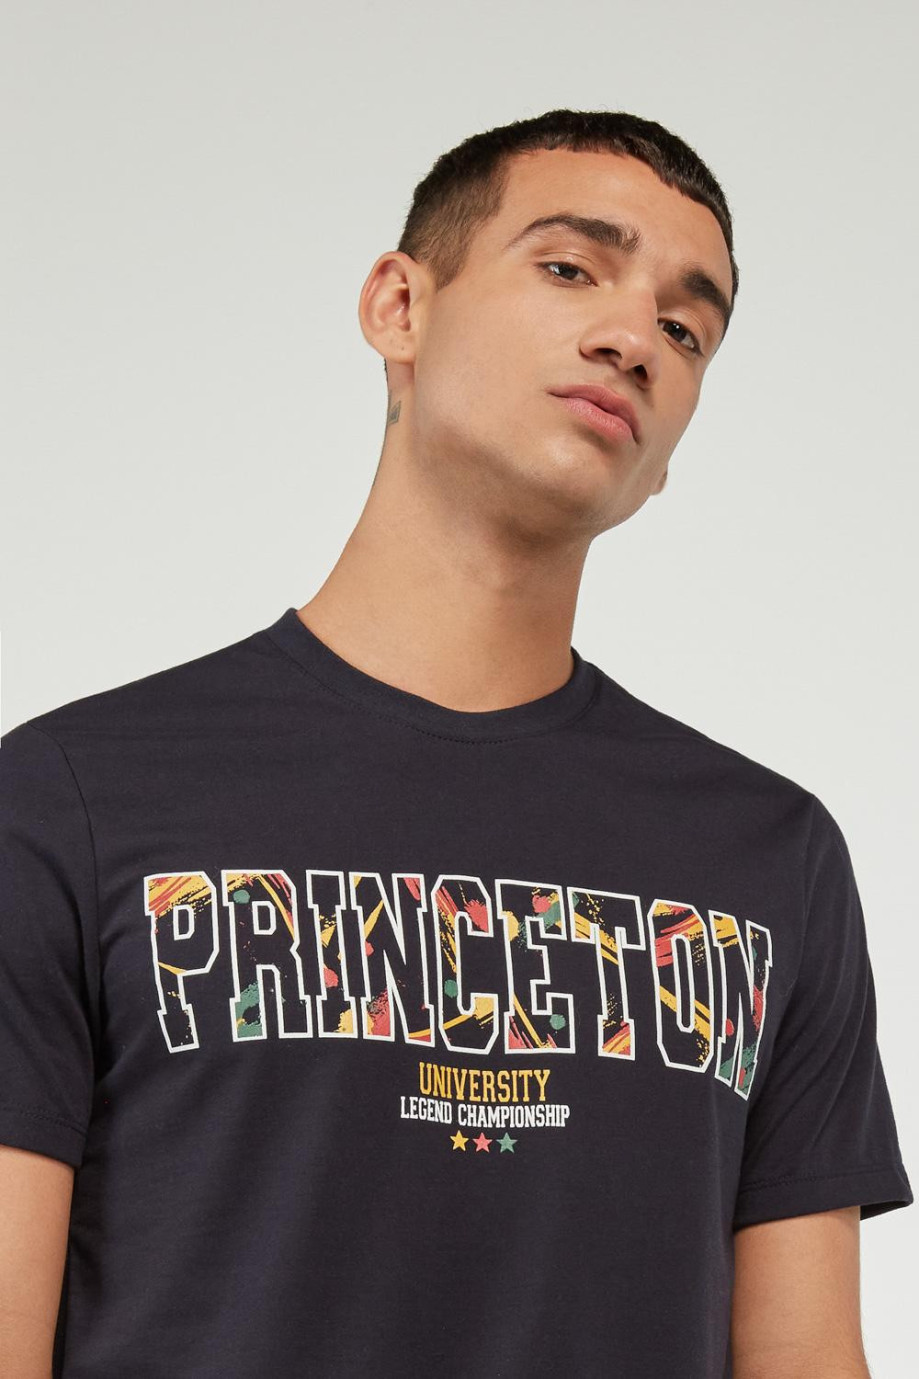 Camiseta cuello redondo azul intensa con estampado de Princeton